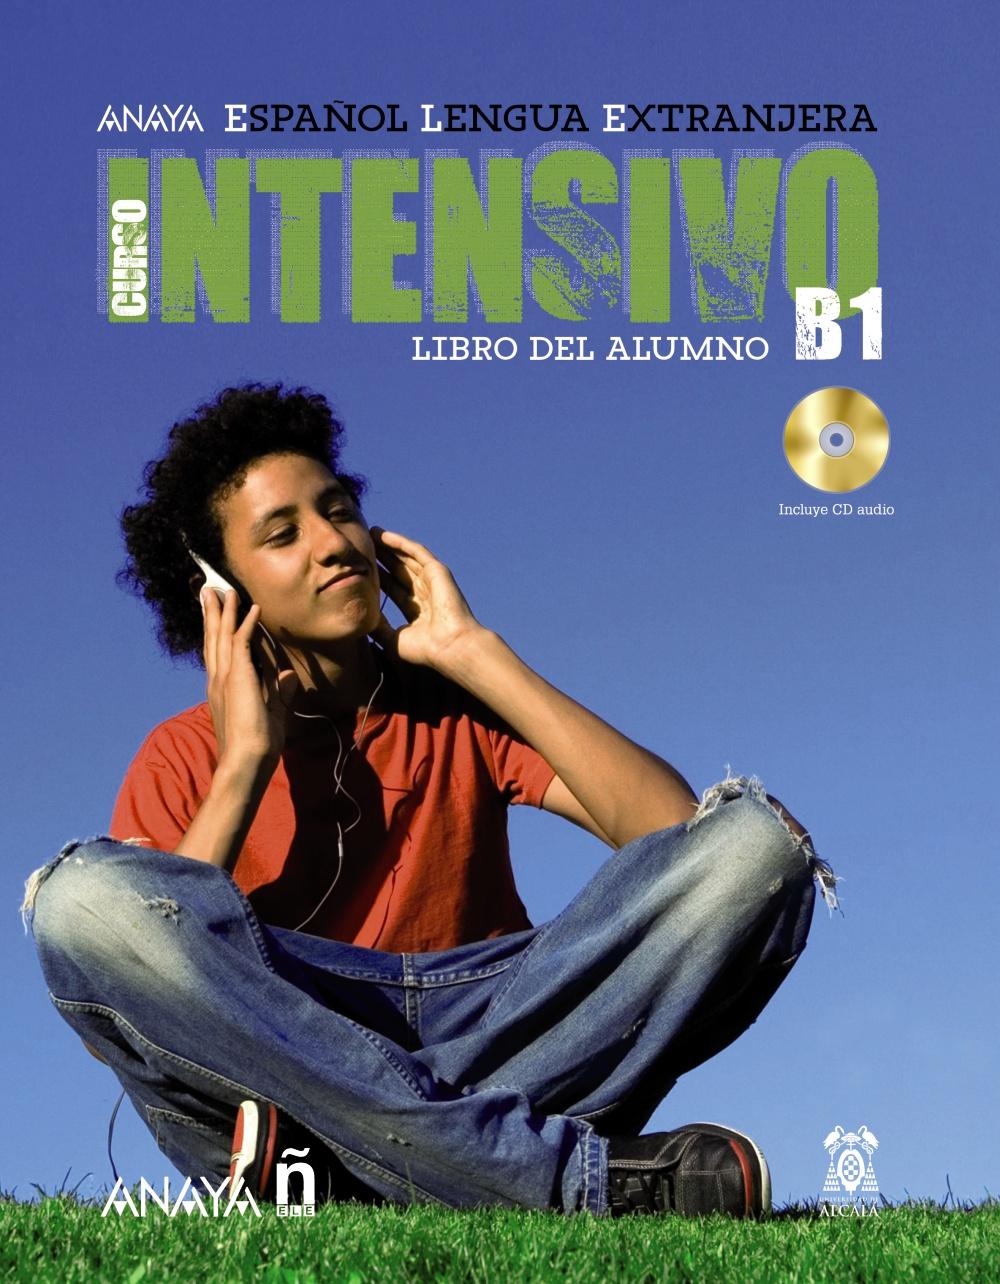 Foto Anaya ele intensivo b1: libro del alumno (español lengua extranje ra) (incluye cd) (en papel) foto 556623